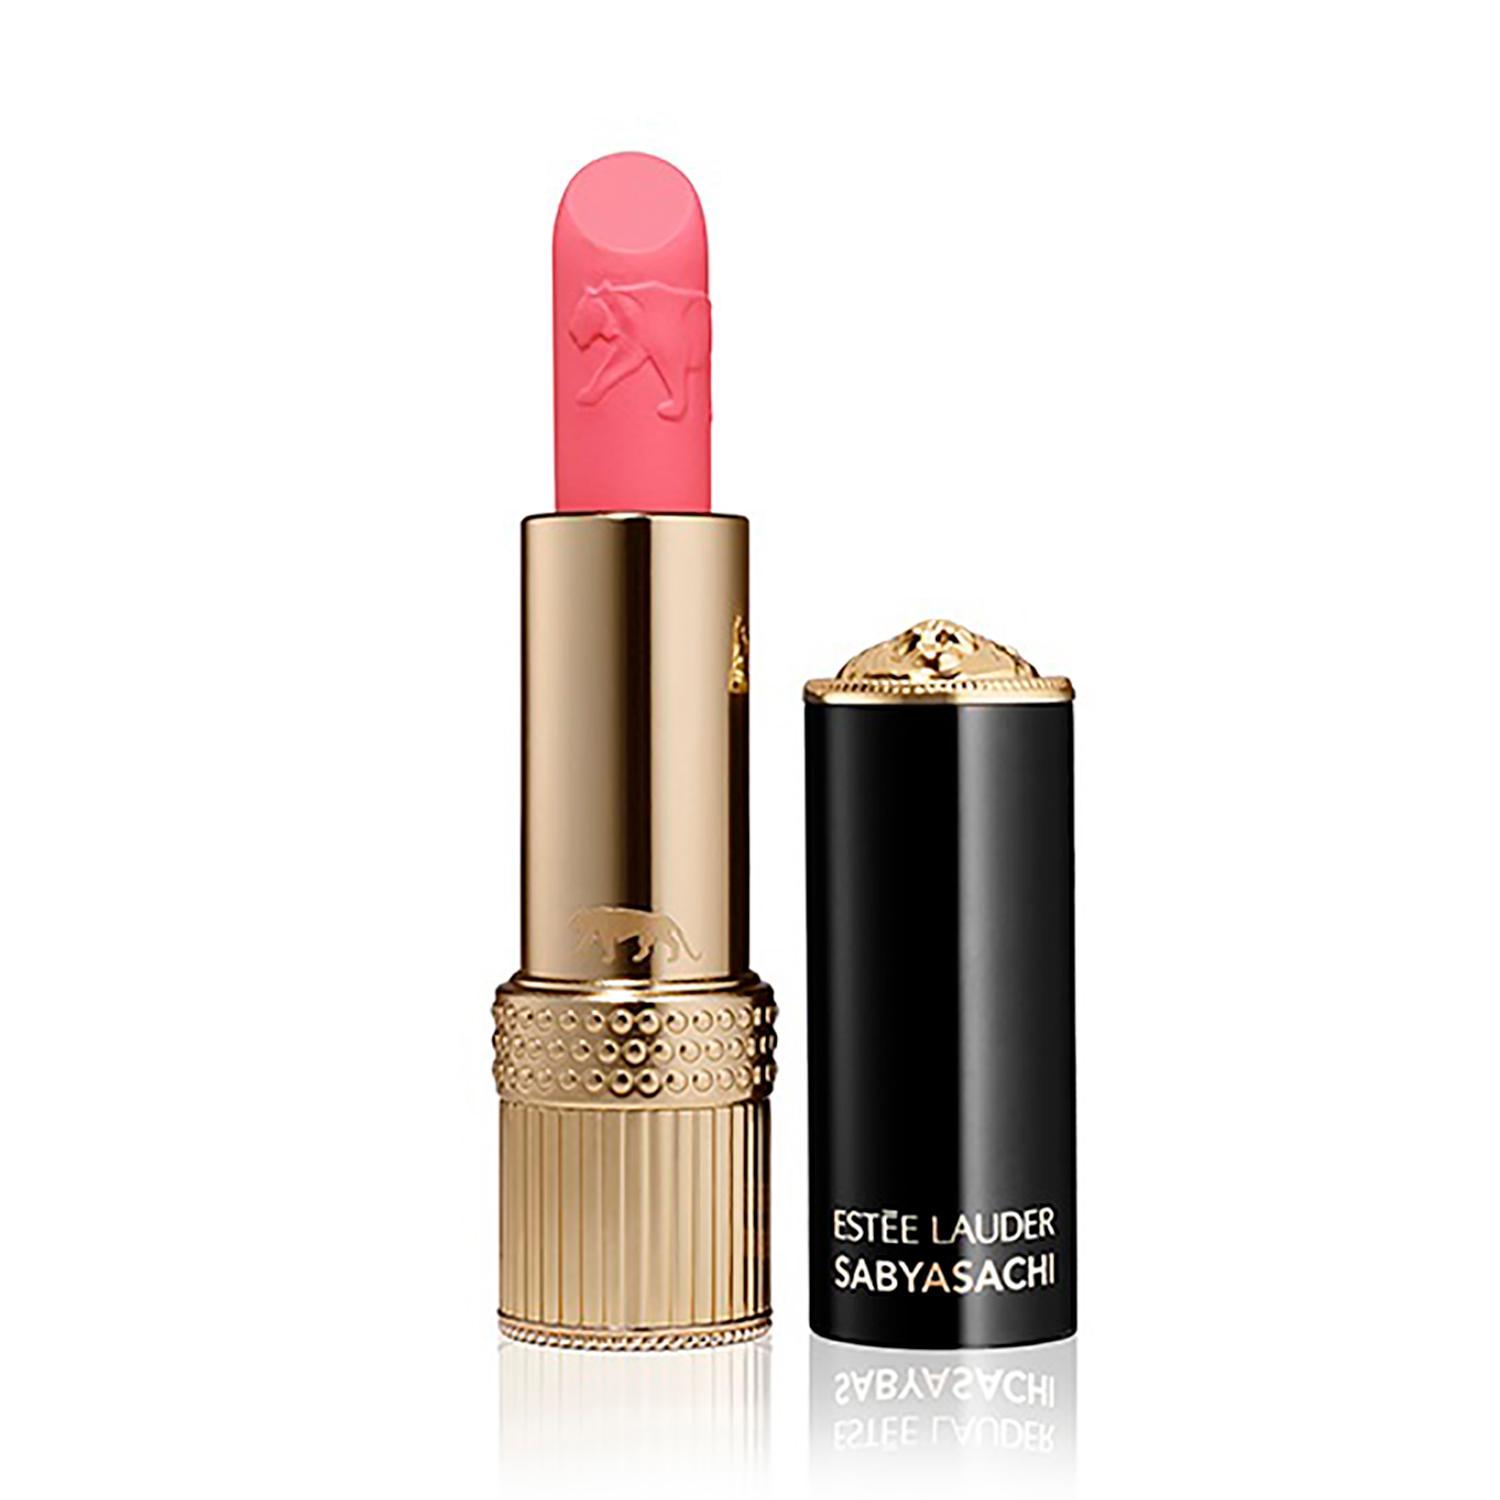 Estee Lauder | Estee Lauder Sabyasachi Limited Edition Lipstick Collection - Devi Pink (3.8 g)